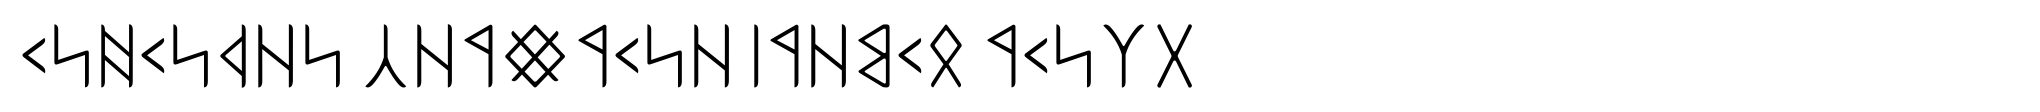 Ongunkan Wardruna Arabic Runes image